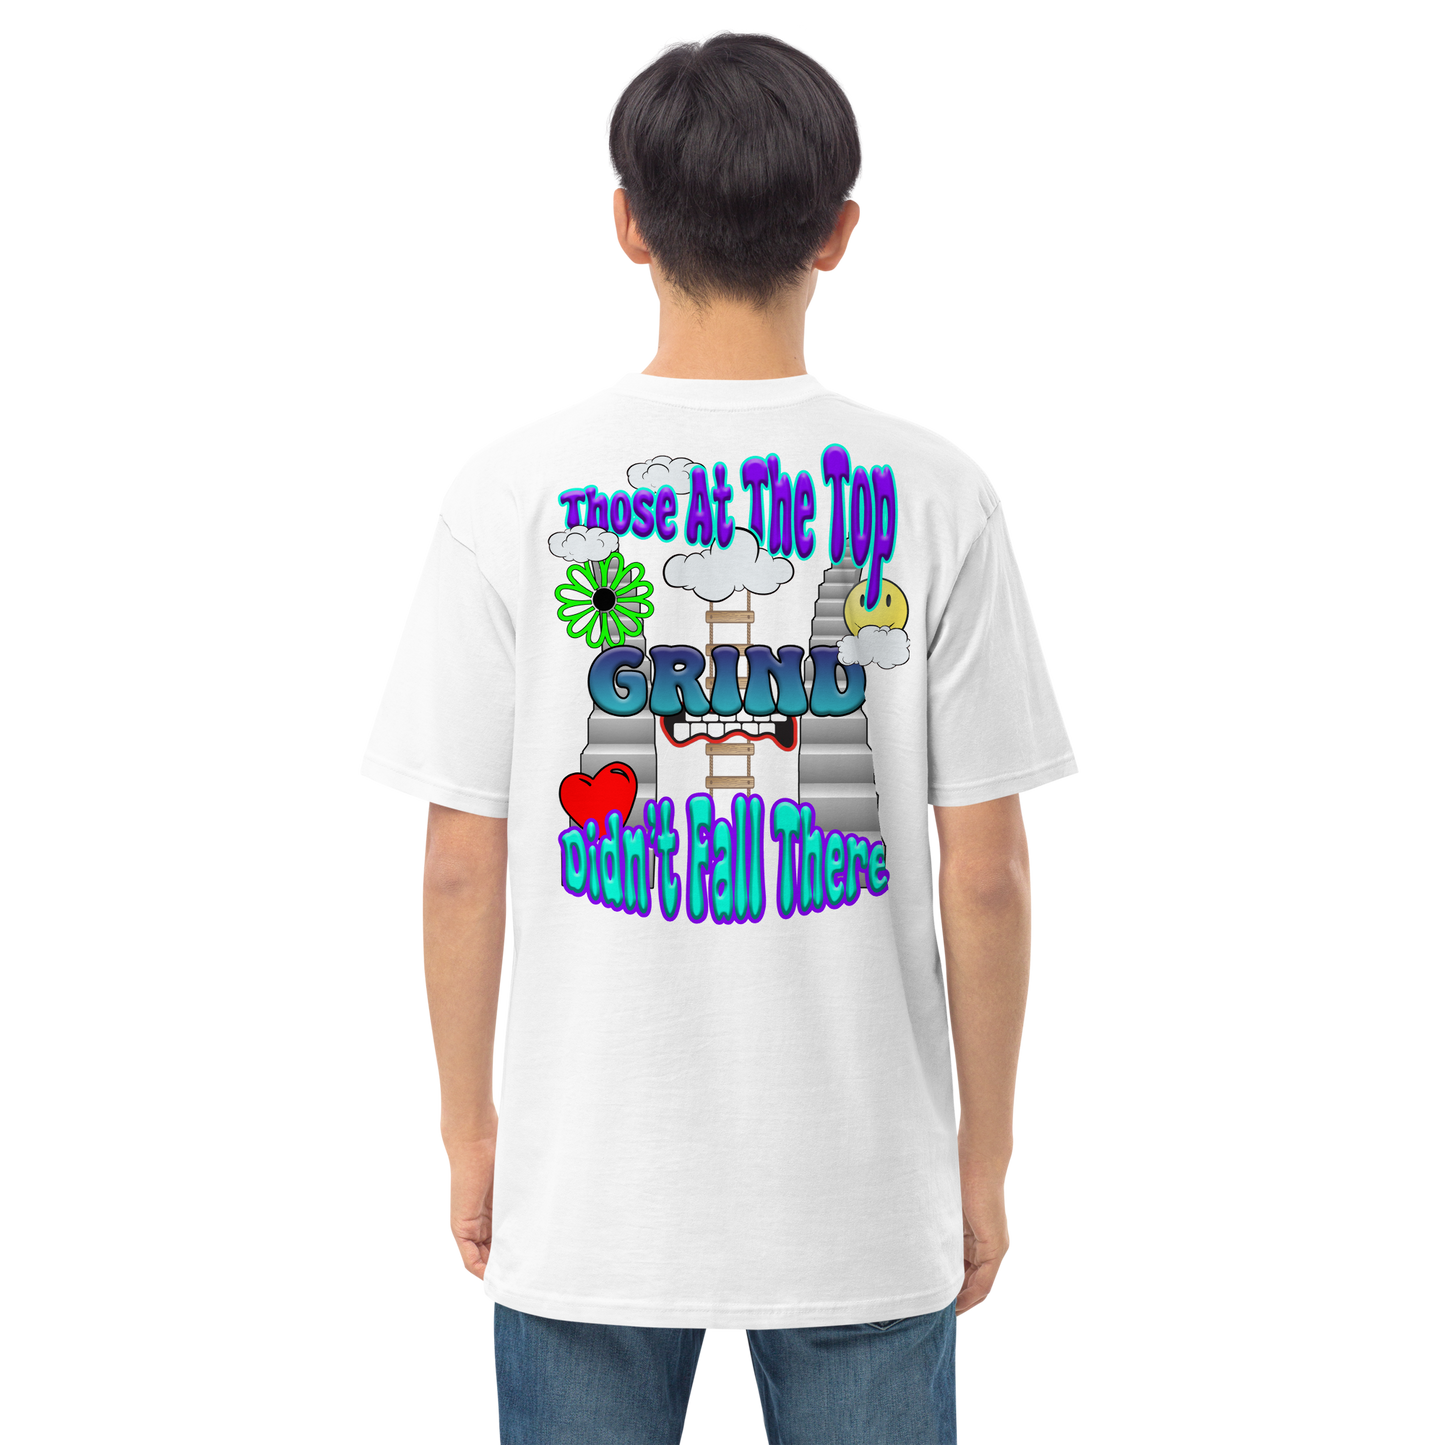 DM "GRIND" Graphic Heavyweight T-Shirt